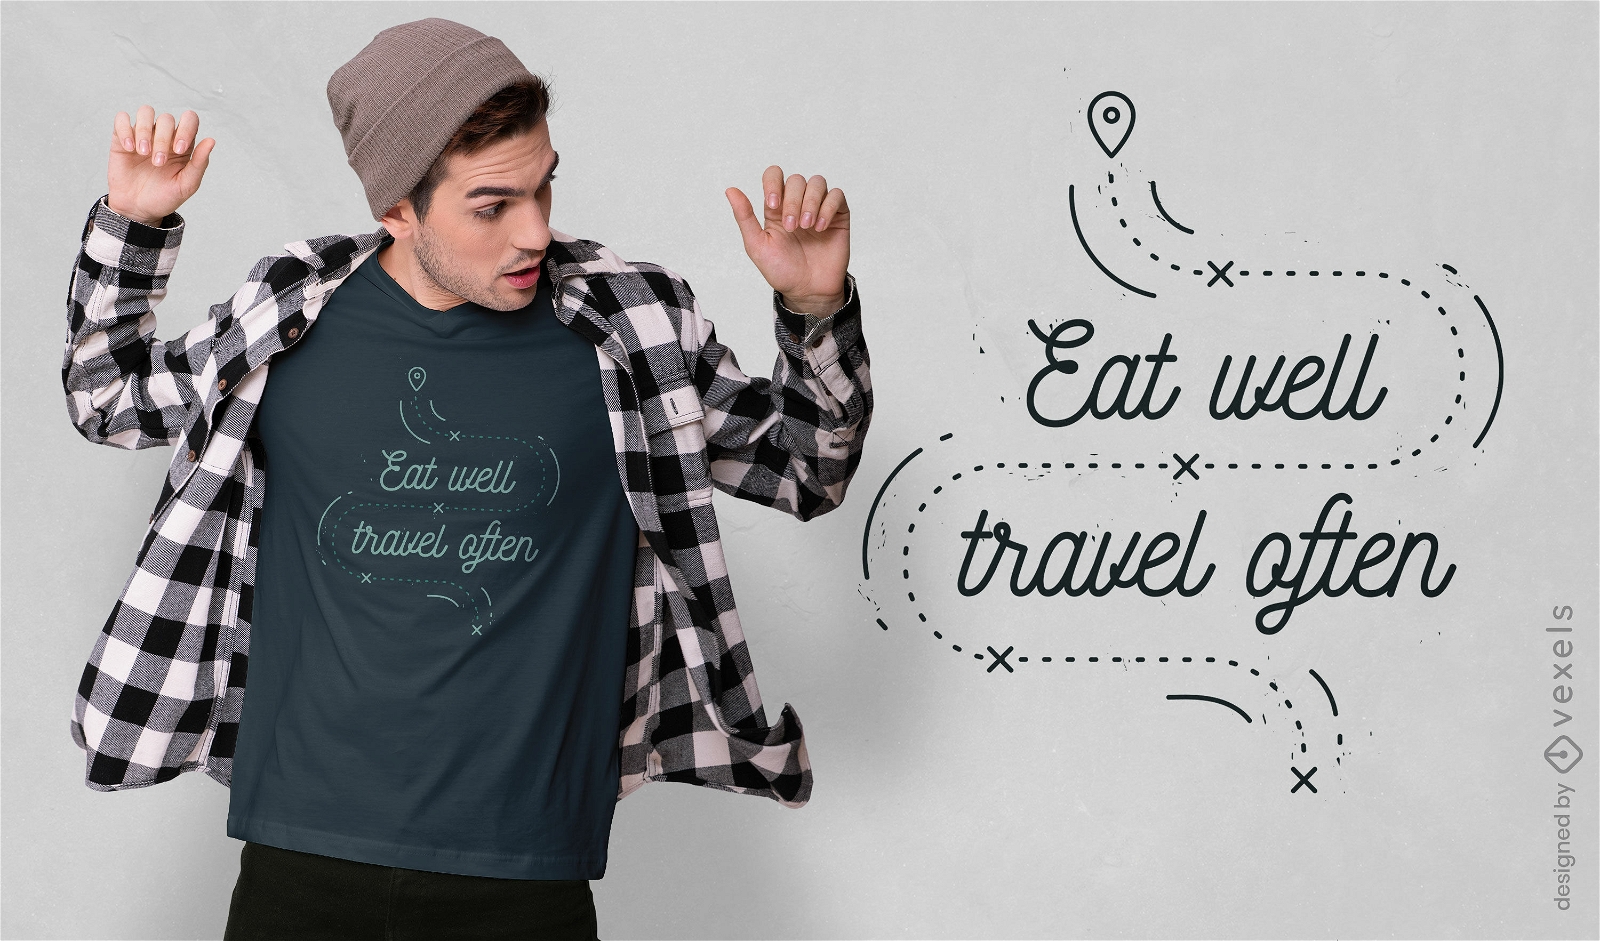 Travel often monoline quote t-shirt design